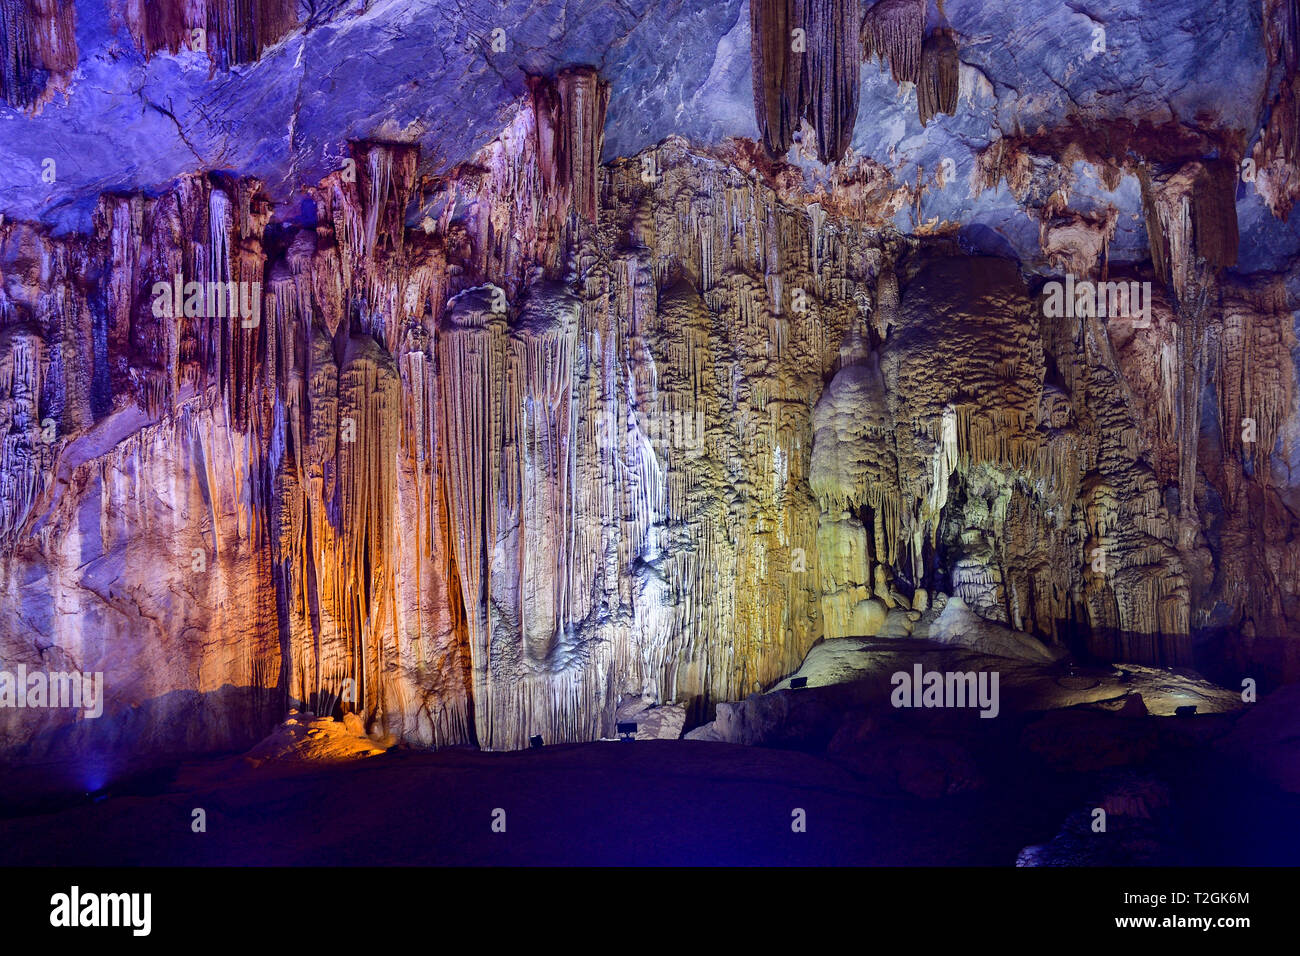 Incredibile forme geologiche in paradiso grotta nei pressi di Phong Nha, Vietnam. Grotta di pietra calcarea ricca di stalattiti e stalagmiti. Foto Stock